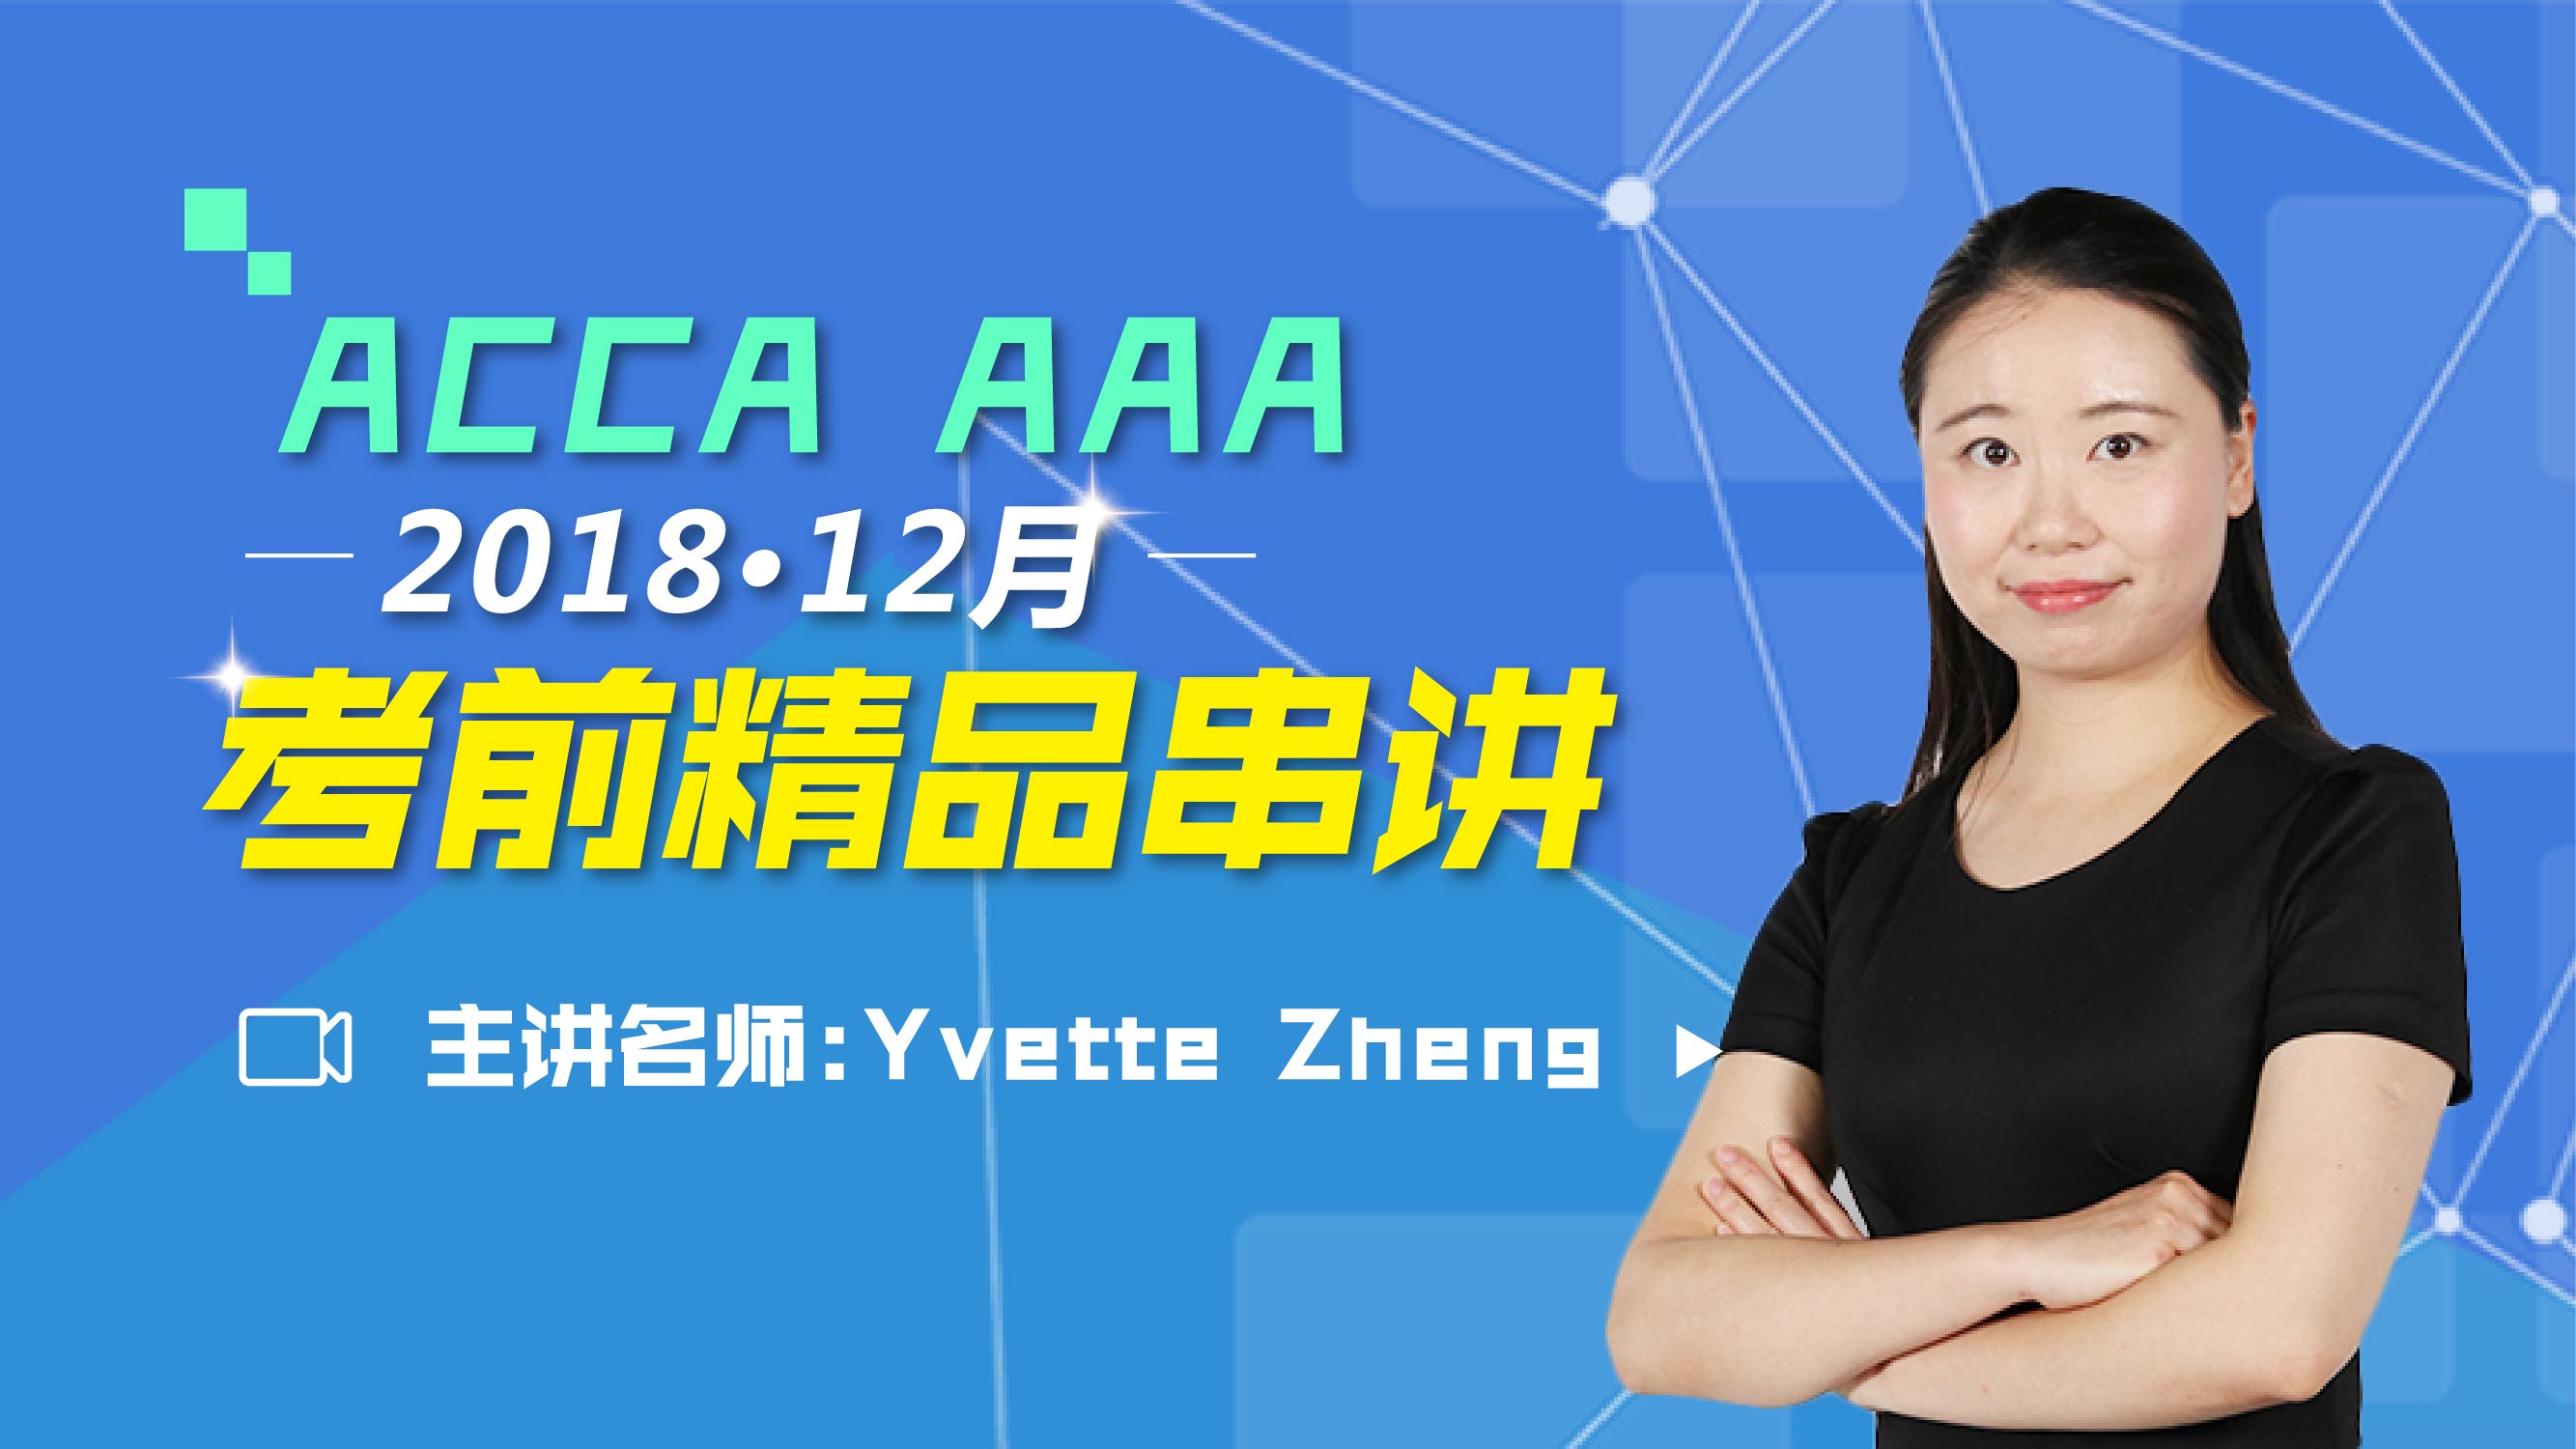 ACCA AAA 2018 12月考前精品串讲 Yvette 